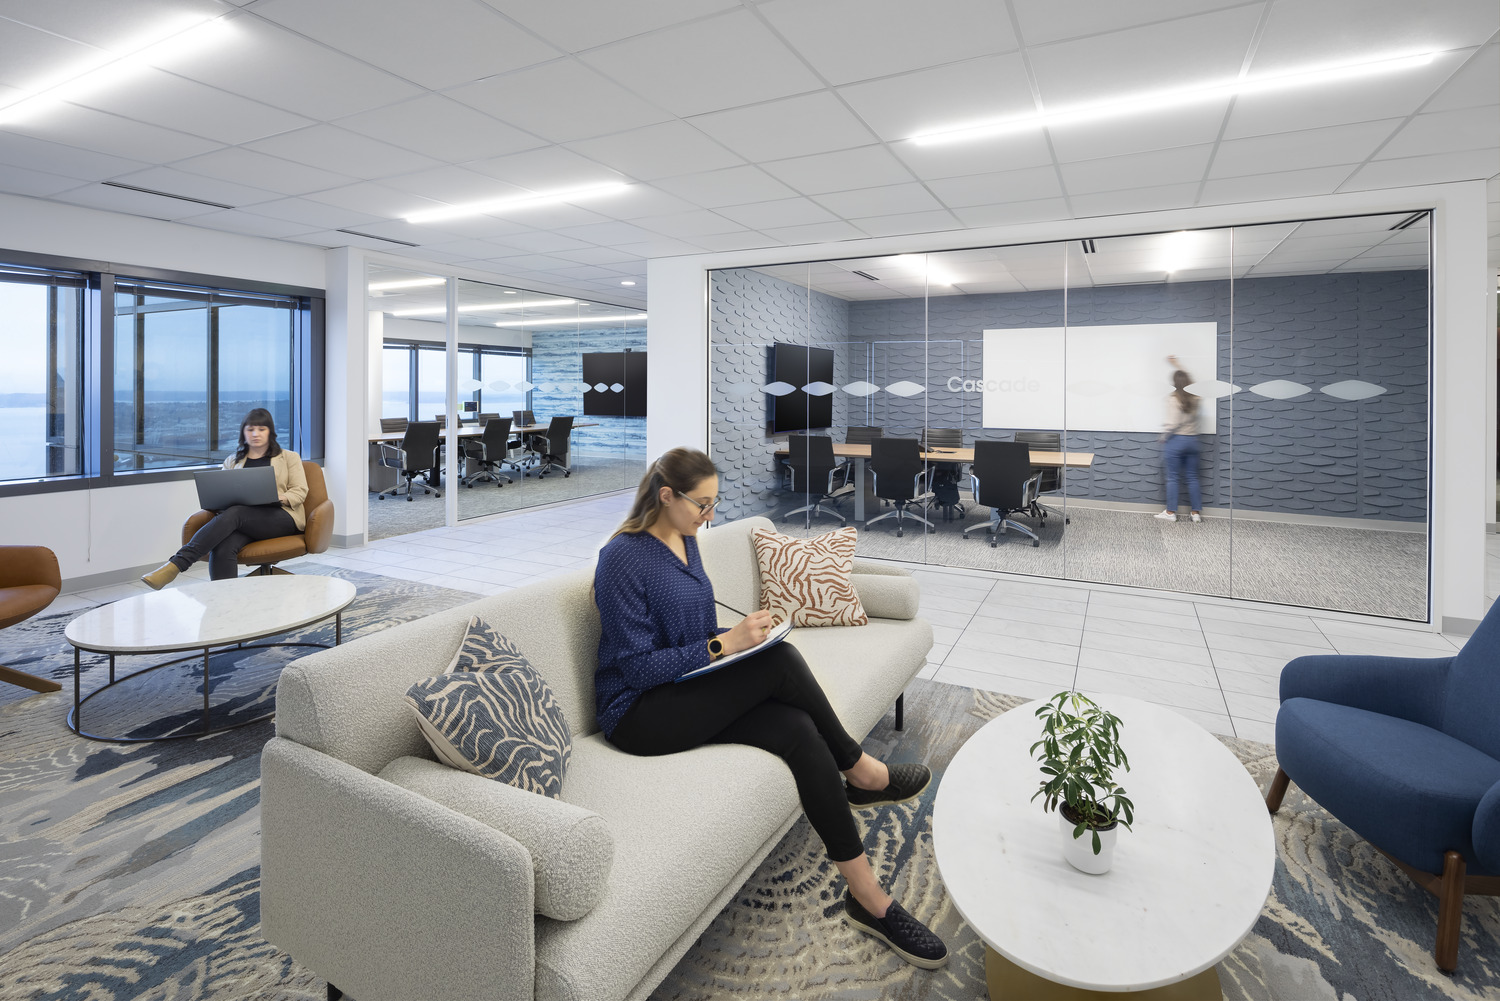 Coworkers using flexible workspaces